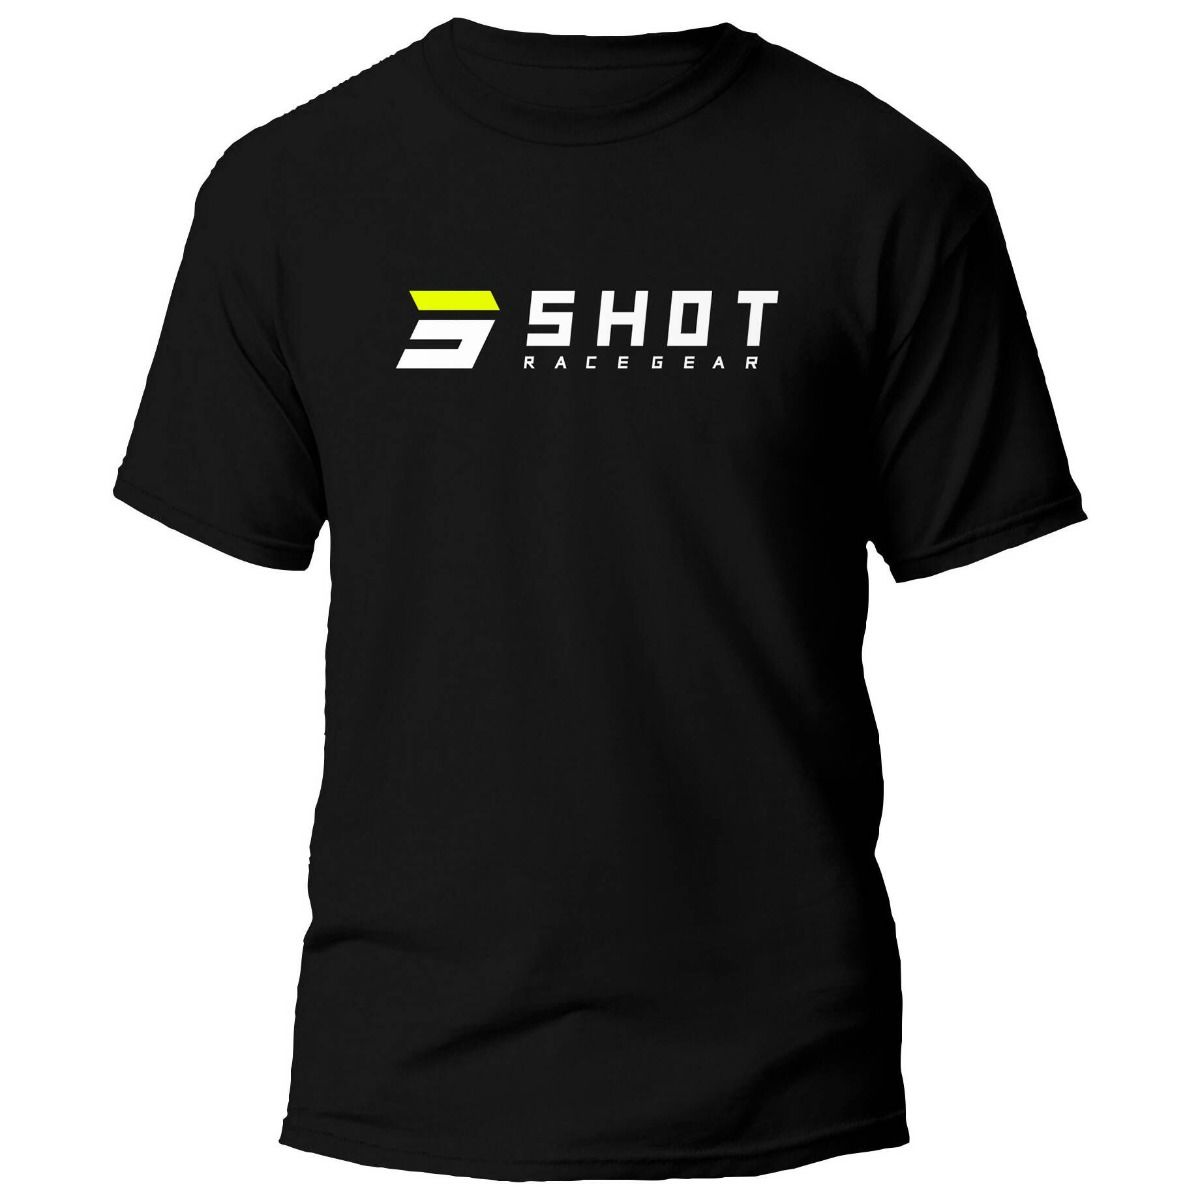 Shot Team T-Shirt